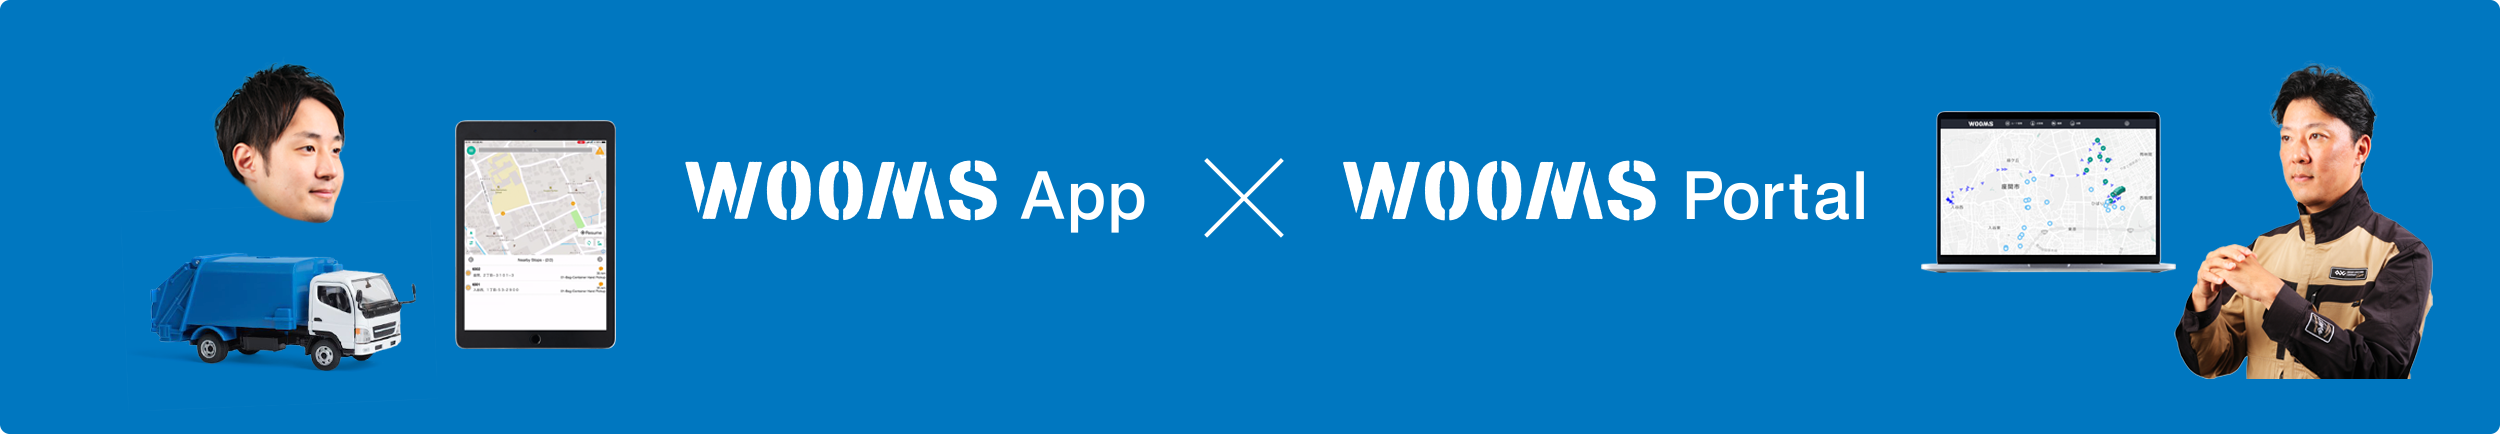 WOOMS App x WOOMS Portal